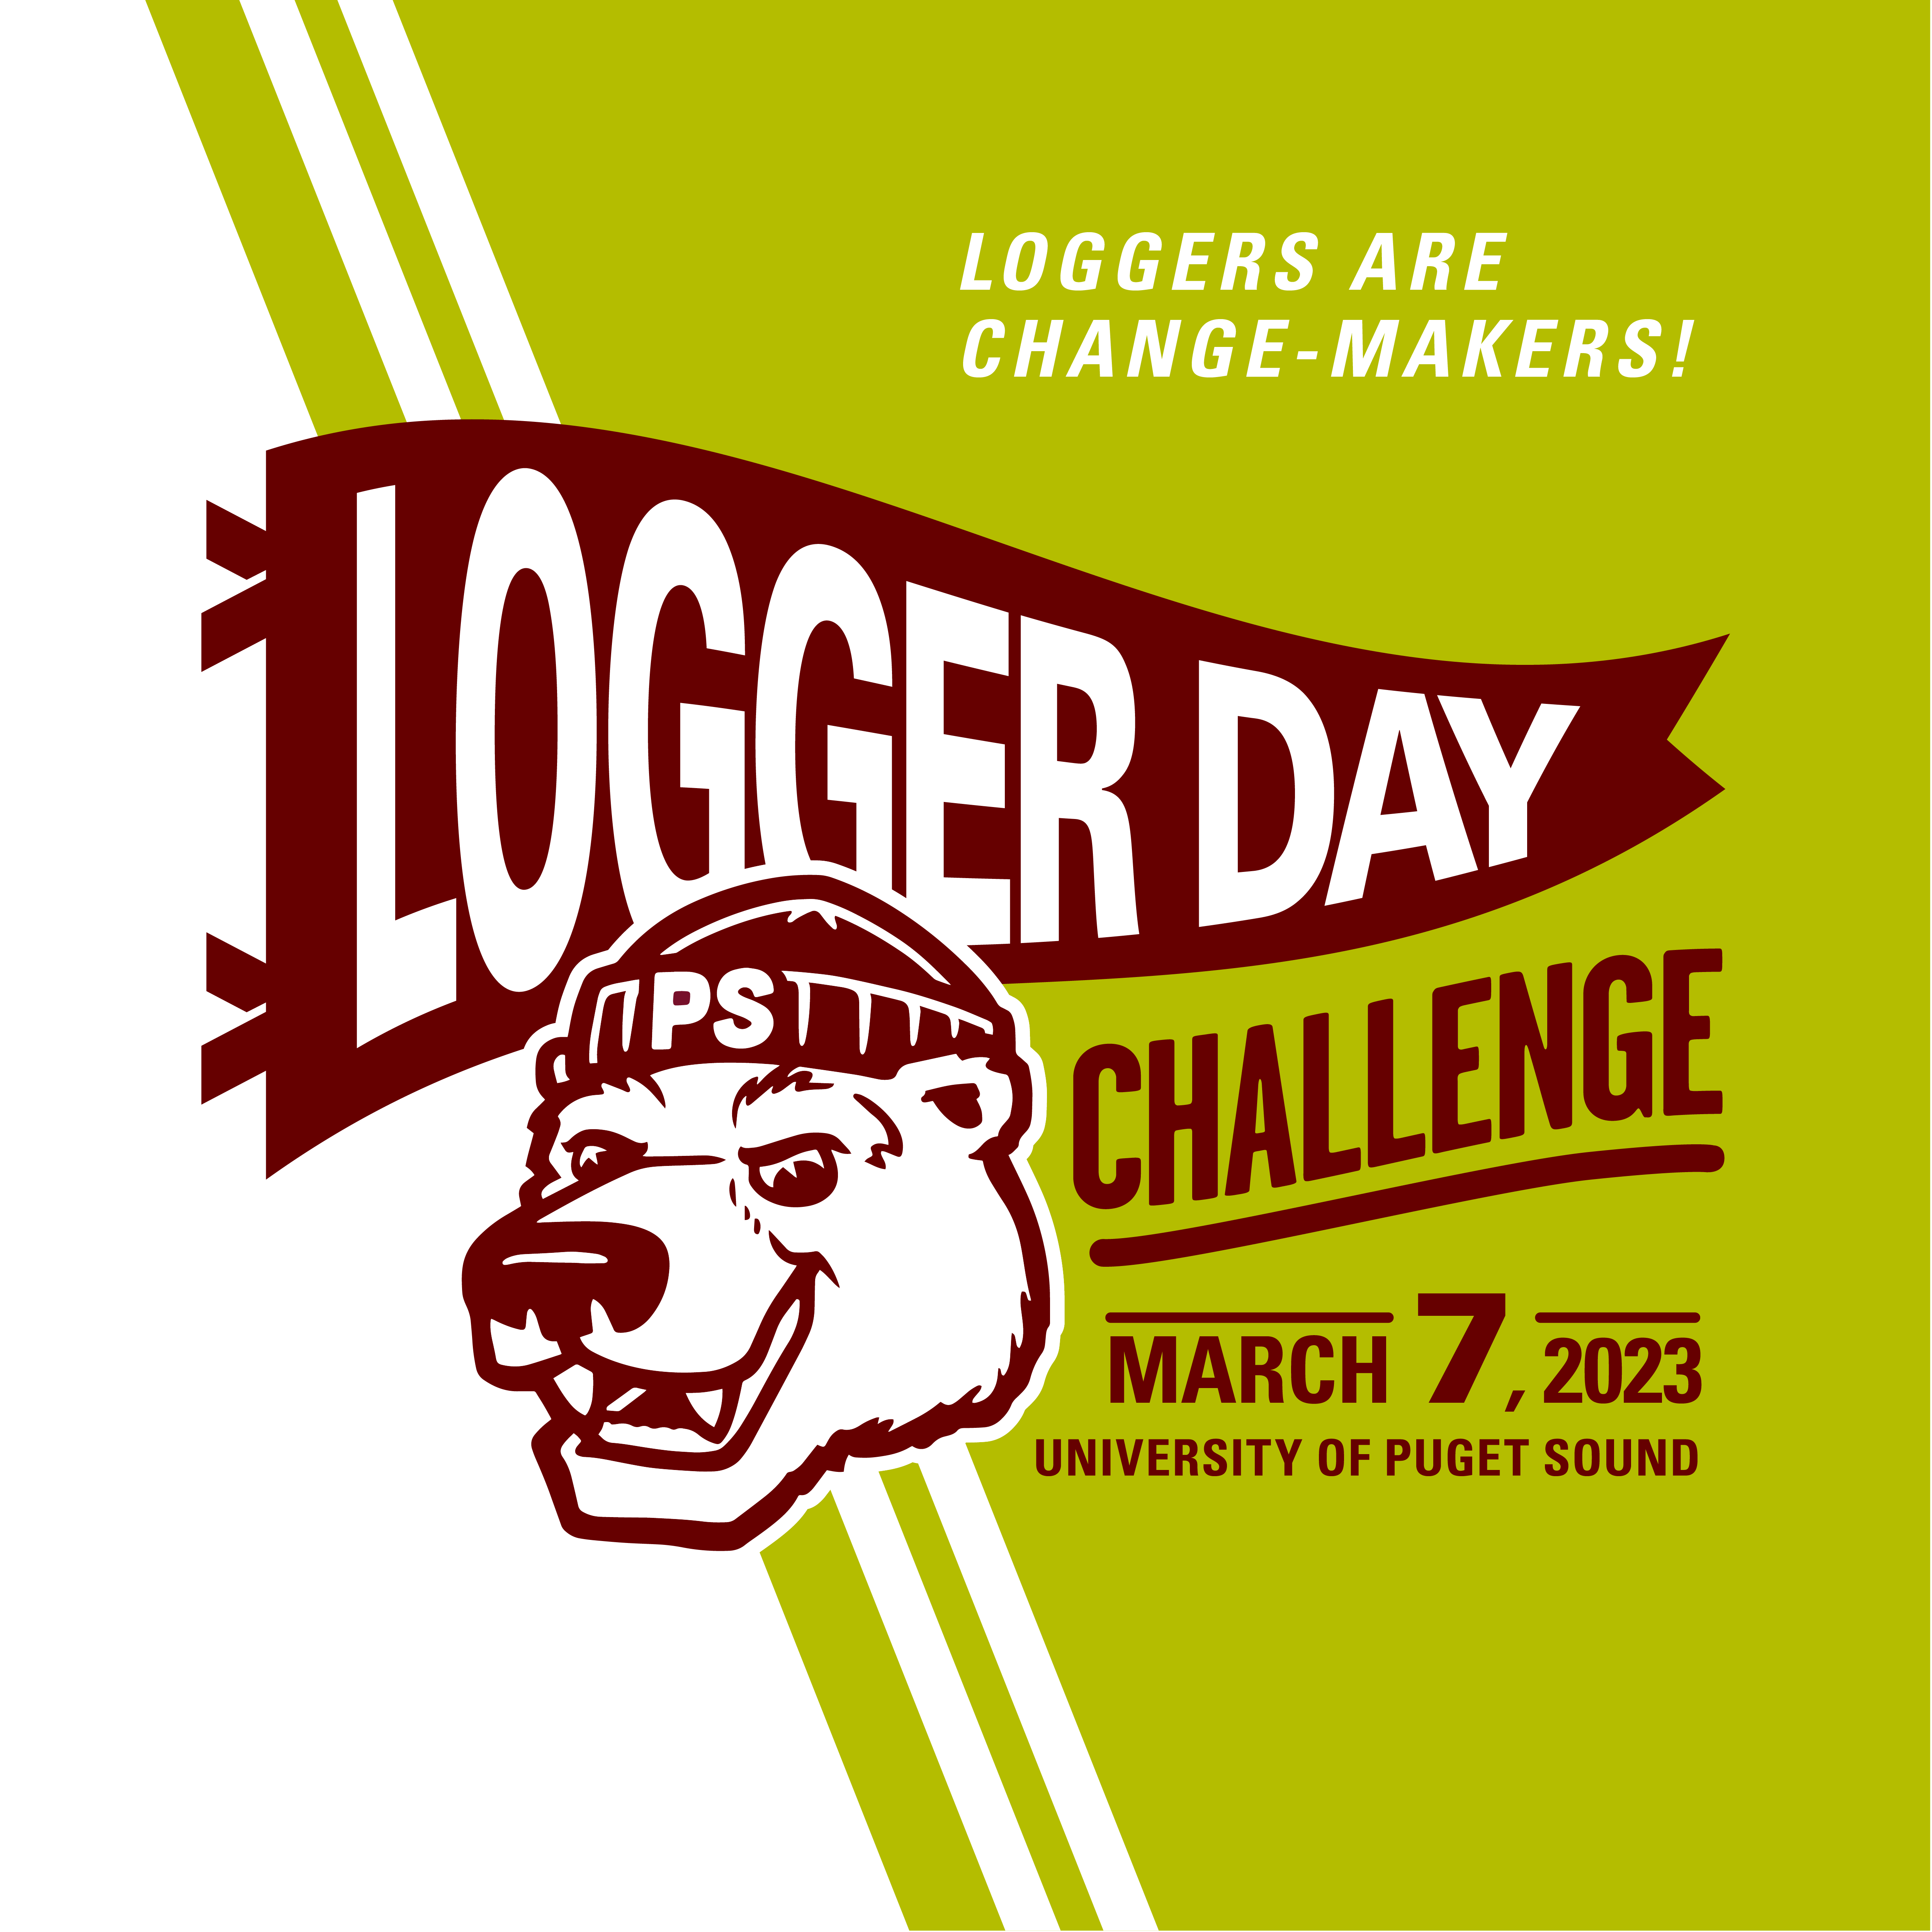 Logger Day Challenge 2023 social media badge: March 7, 2023